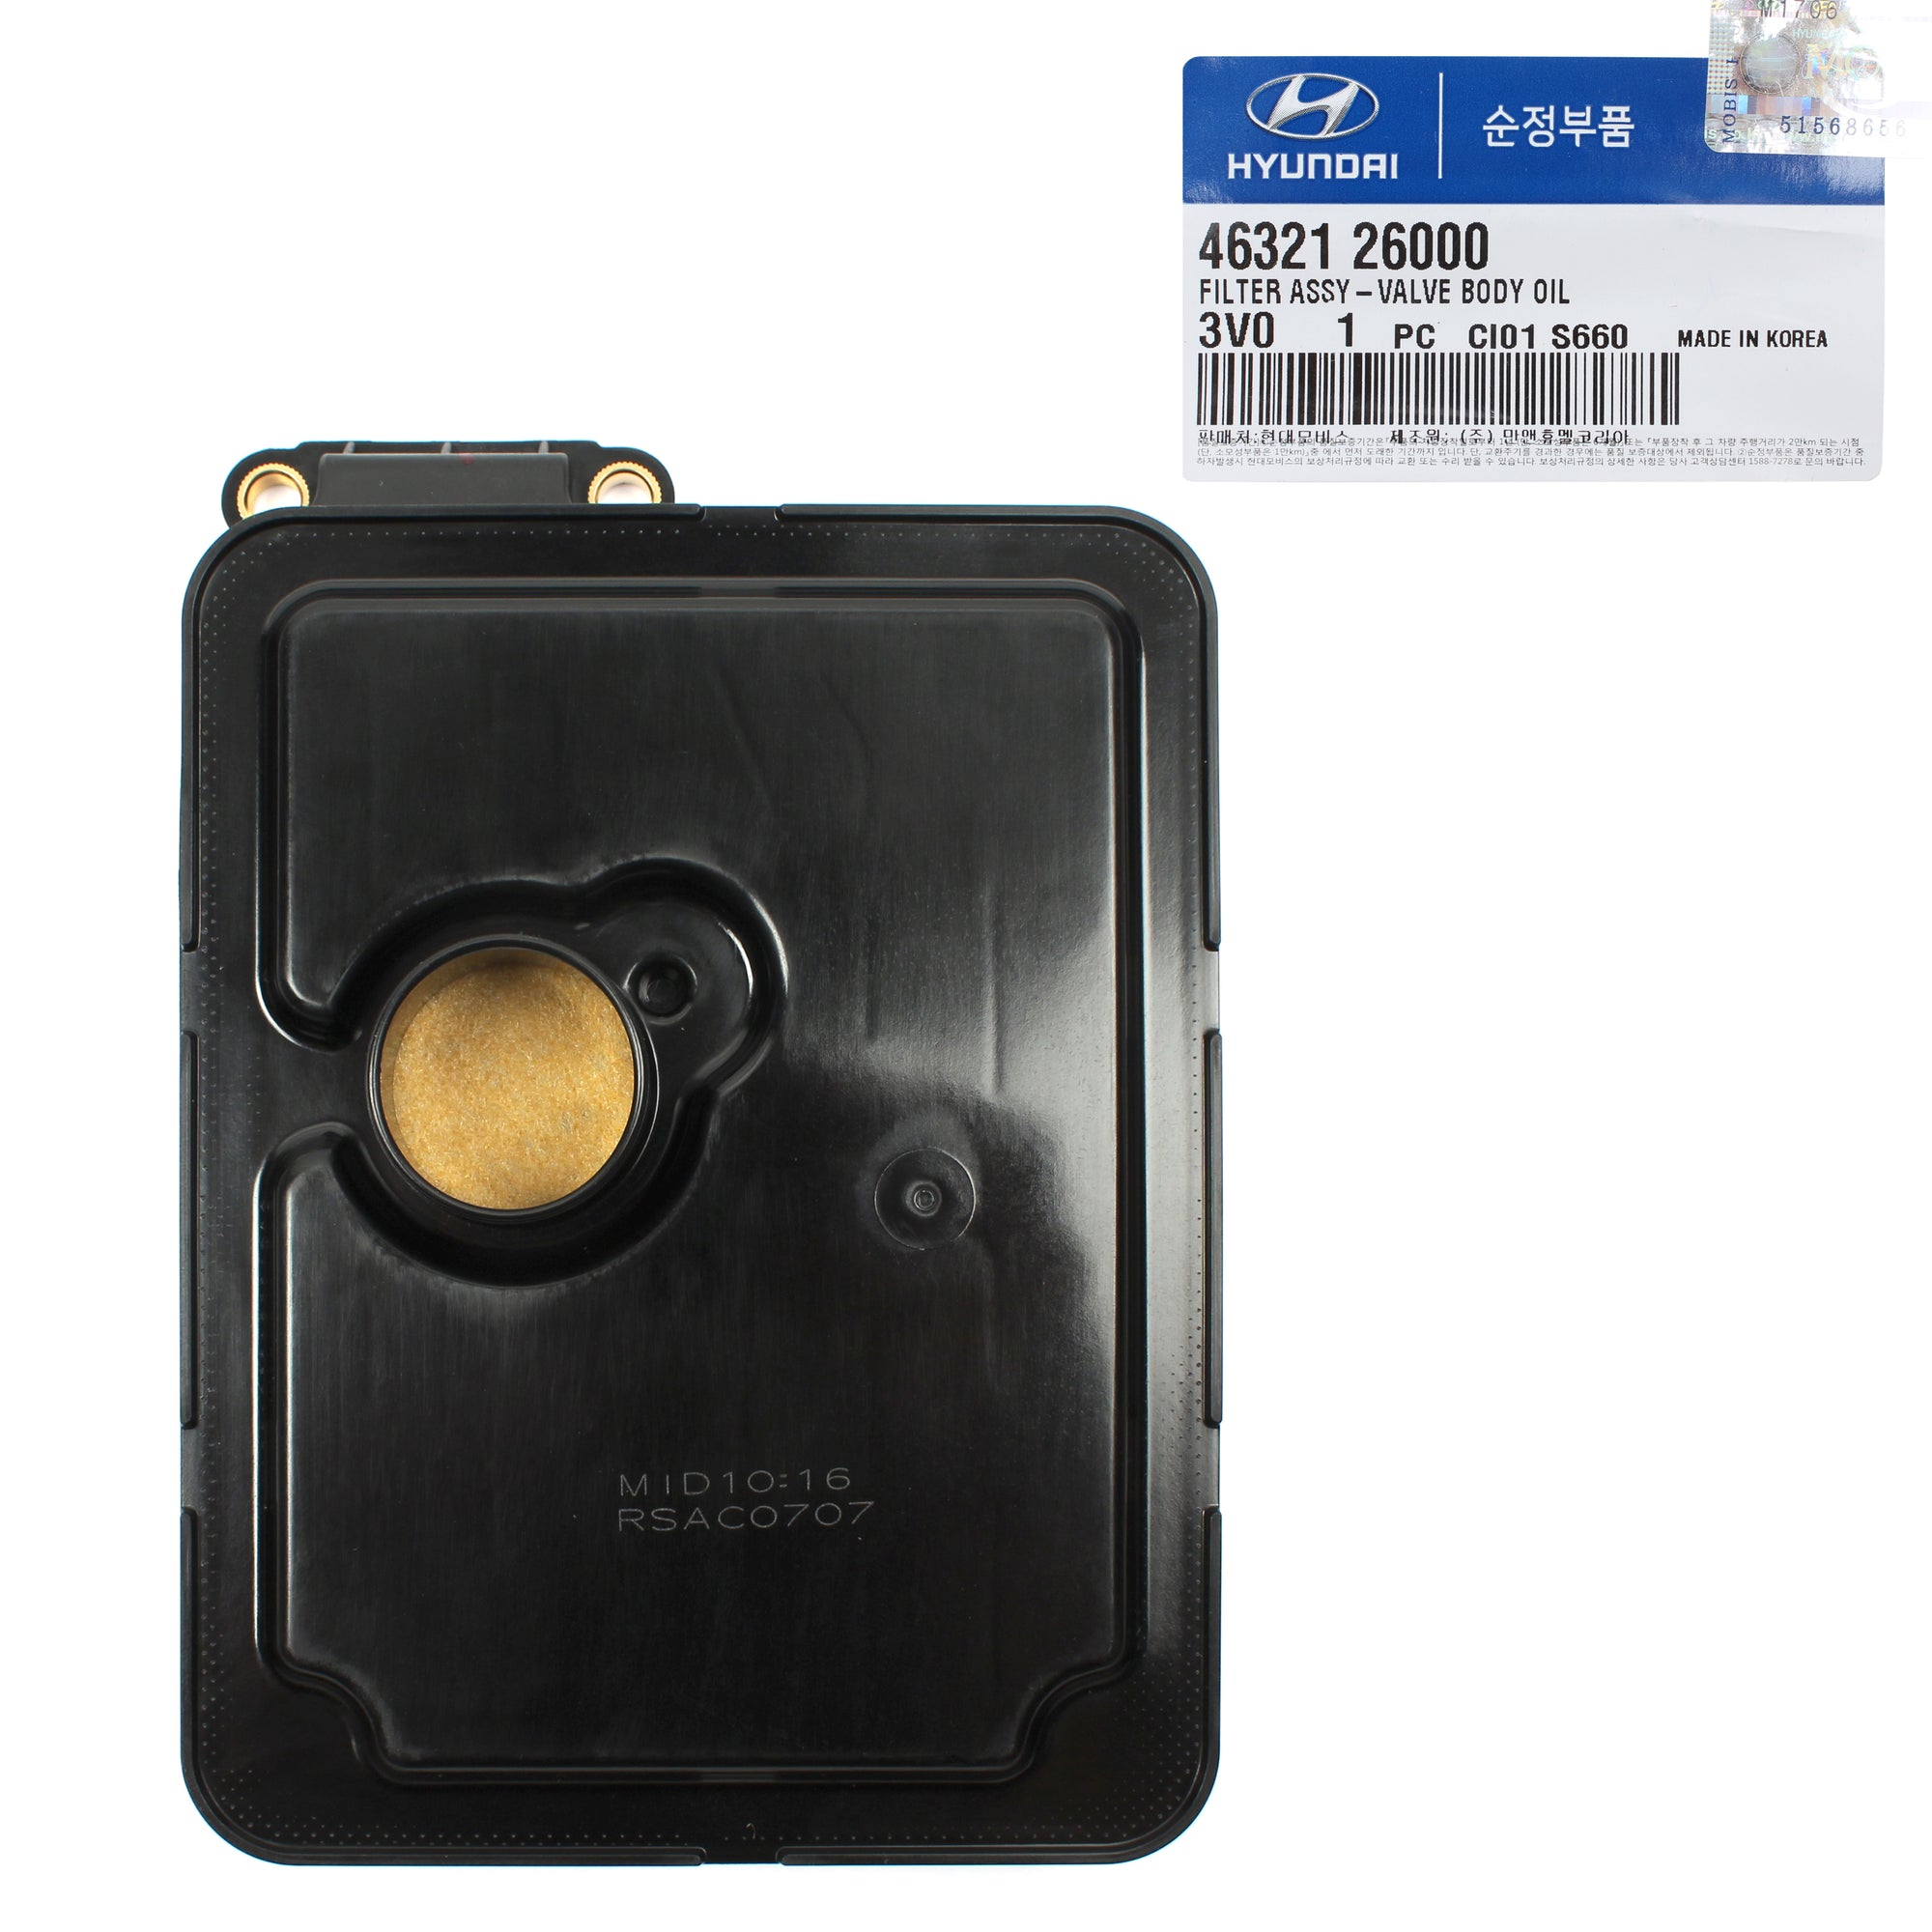 GENUINE Auto Transmission Oil Filter for 2010-17 Hyundai Kia OEM 4632126000